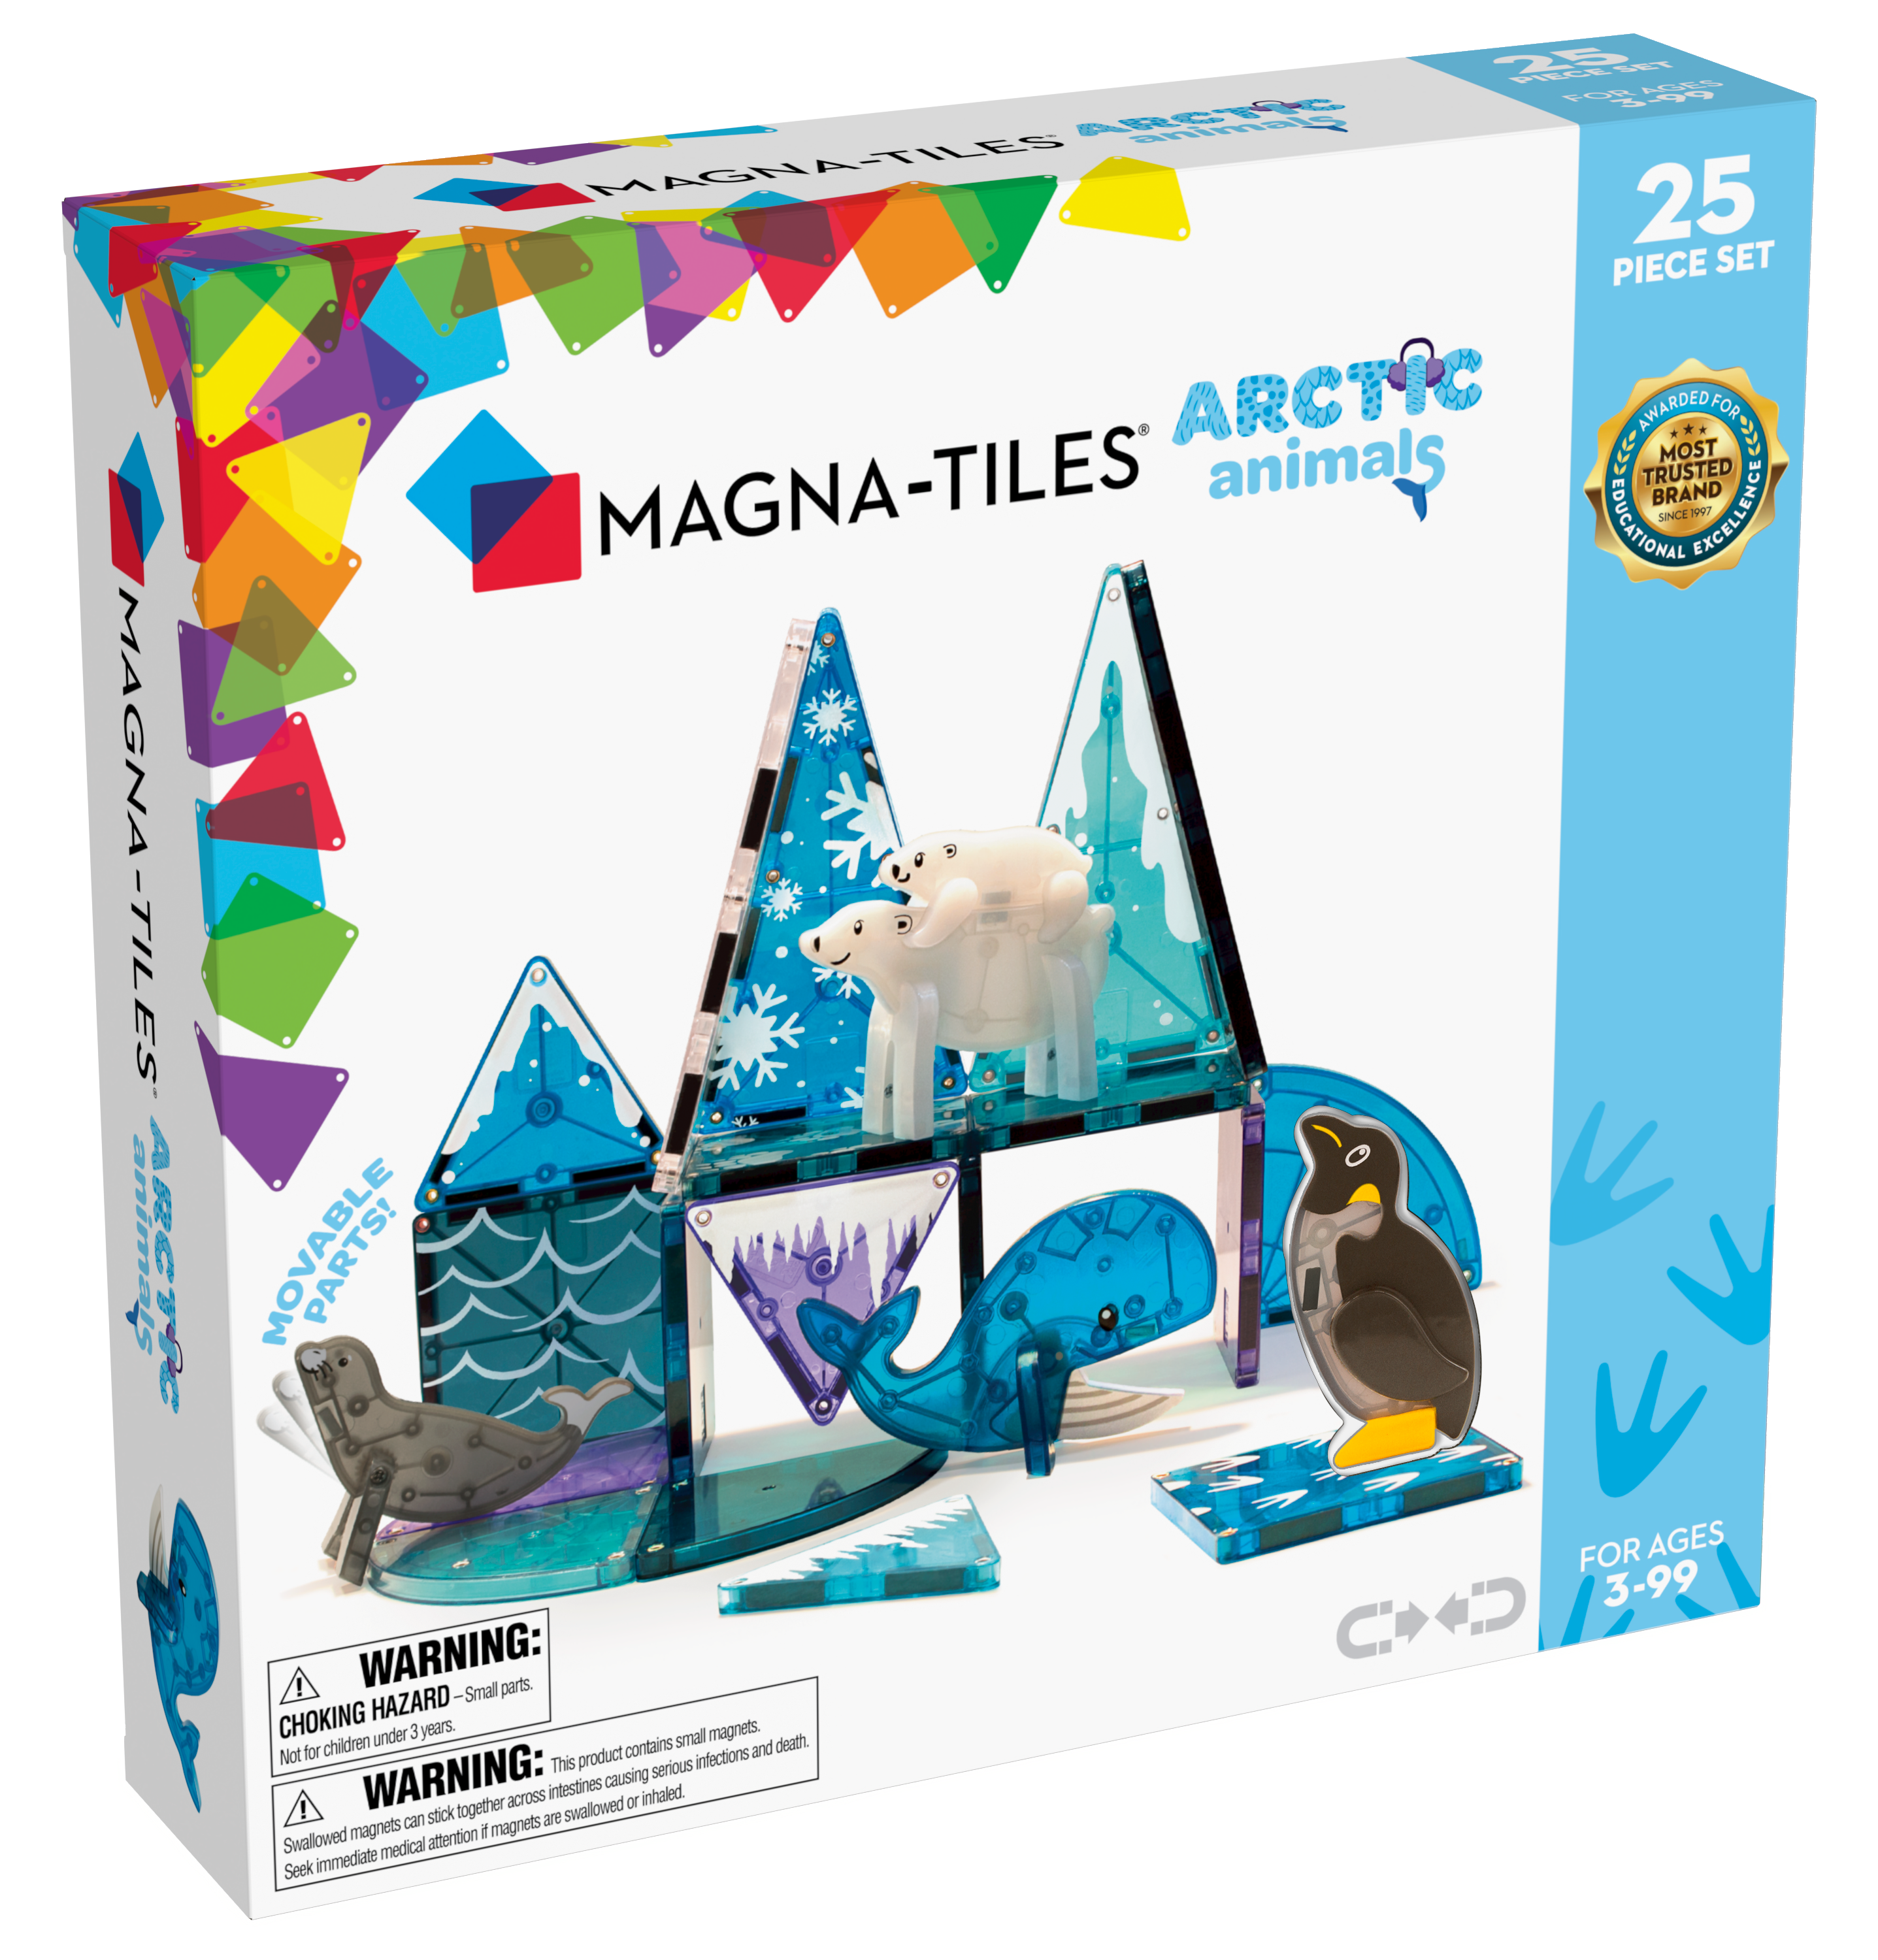 Magna-Tiles Arctic Animals | 25 Stuks